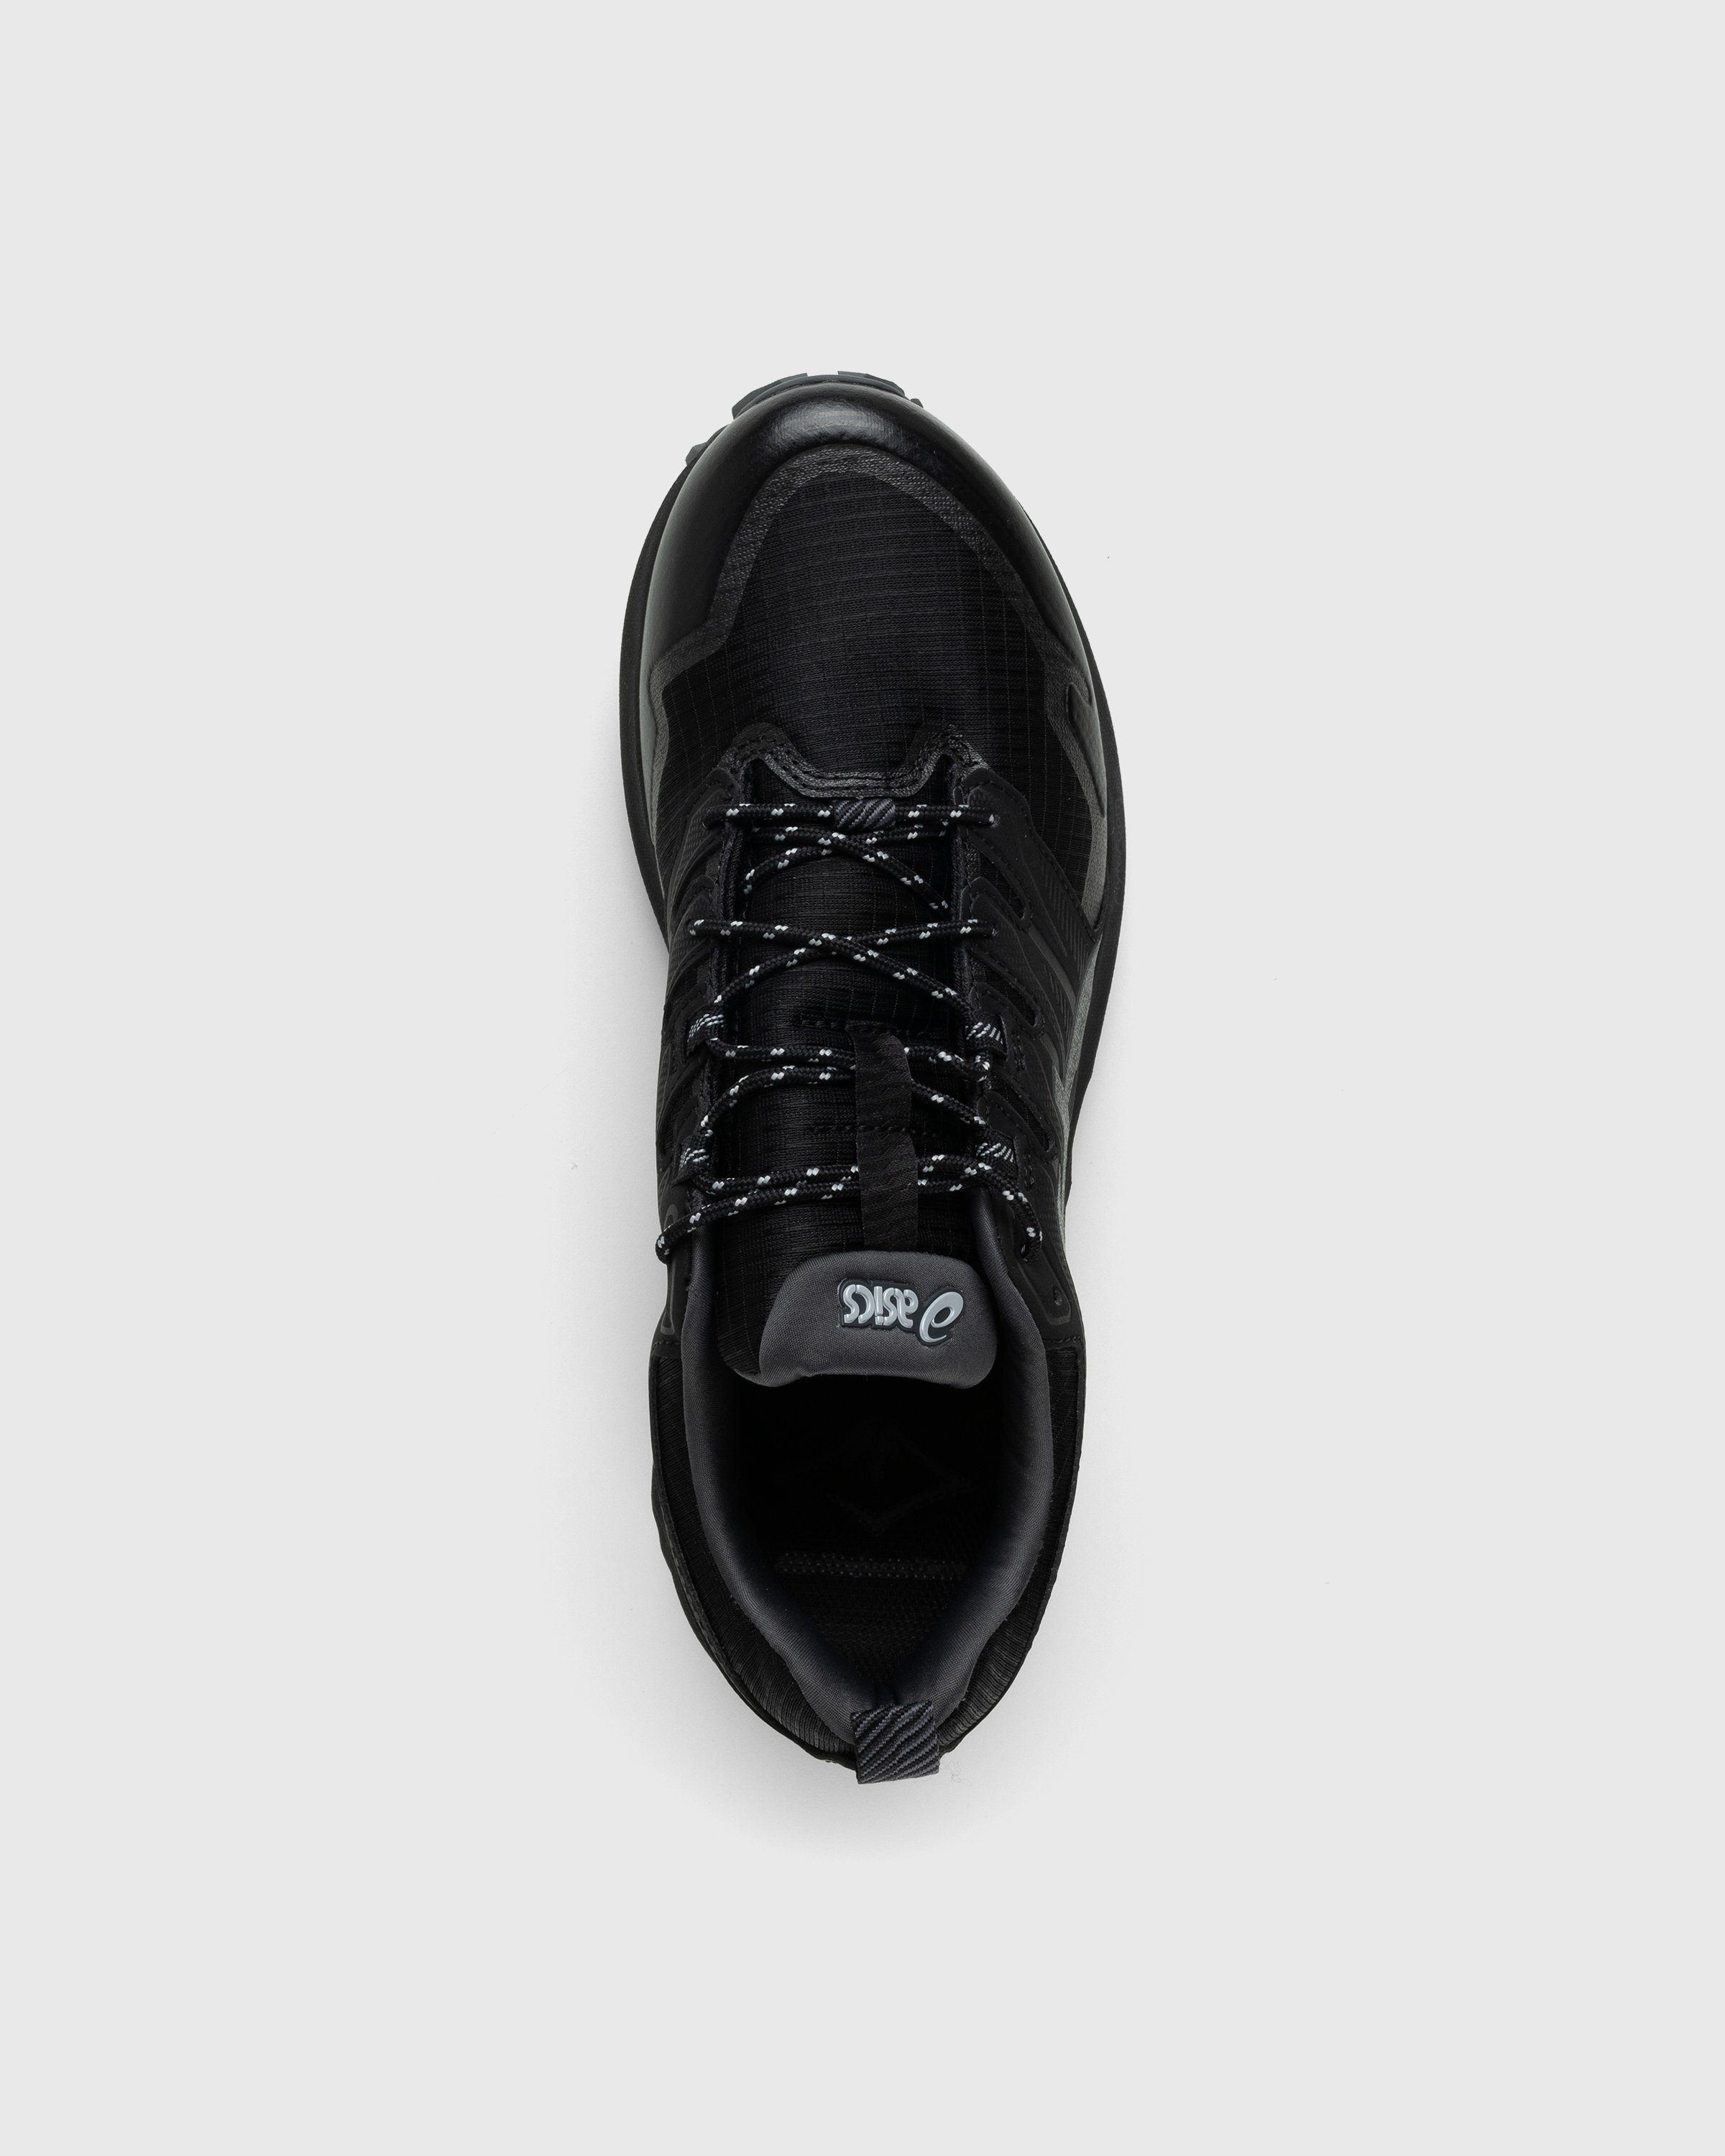 asics - GEL-TRABUCO TERRA SPS Black - Footwear - Black - Image 5